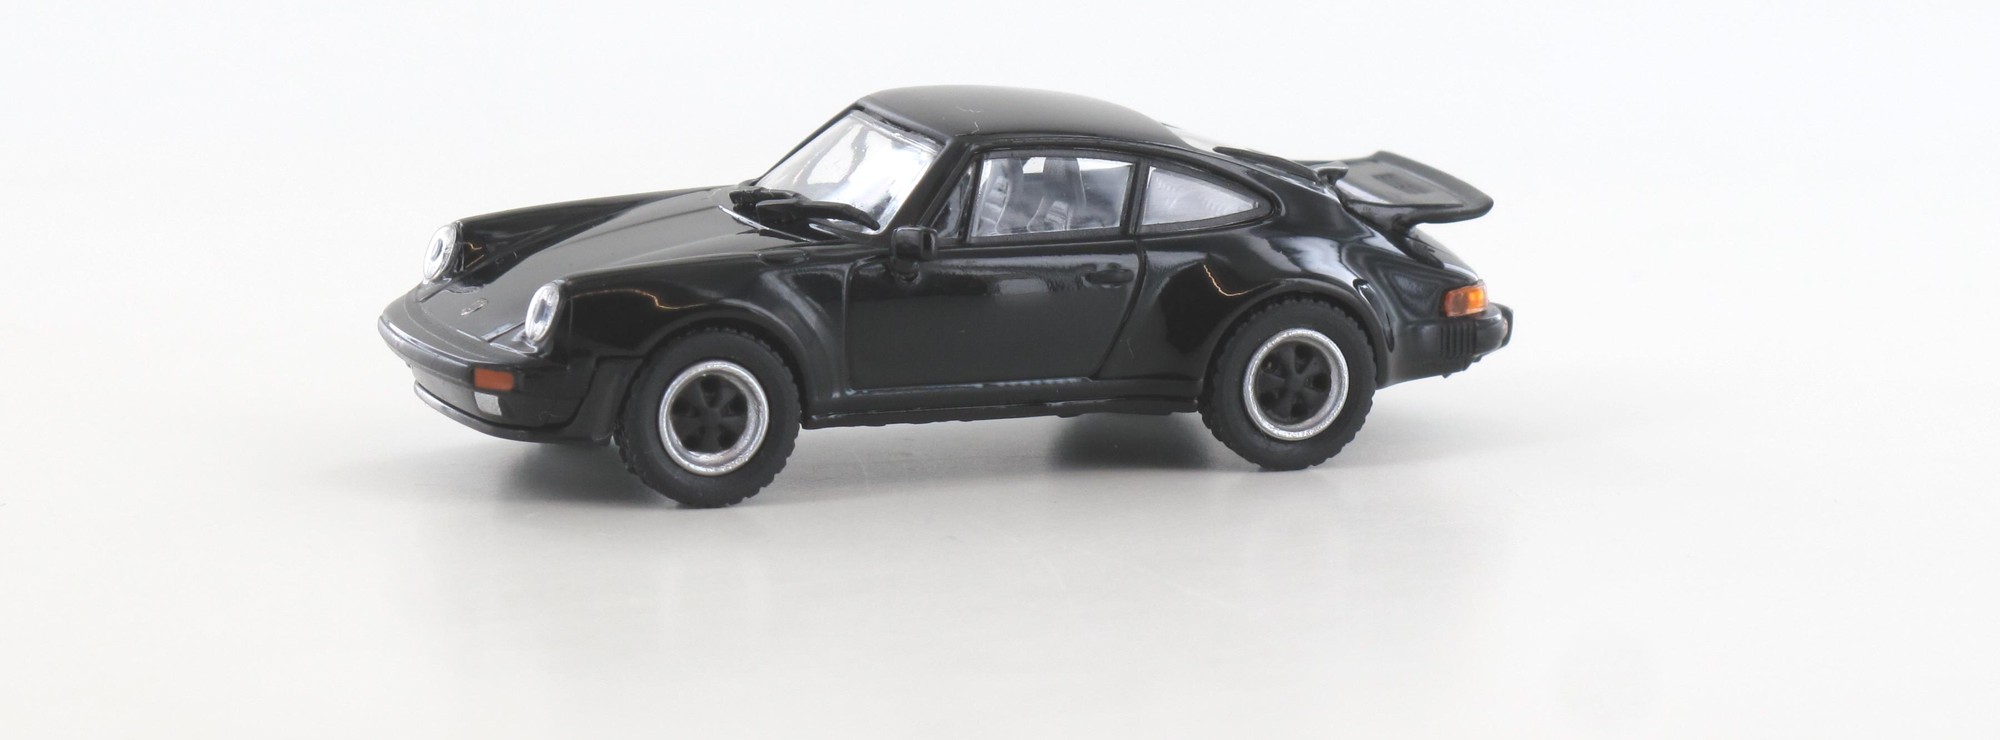 Porsche 911 Turbo Coupé - 1977 - black 870066101 Модель 1:87